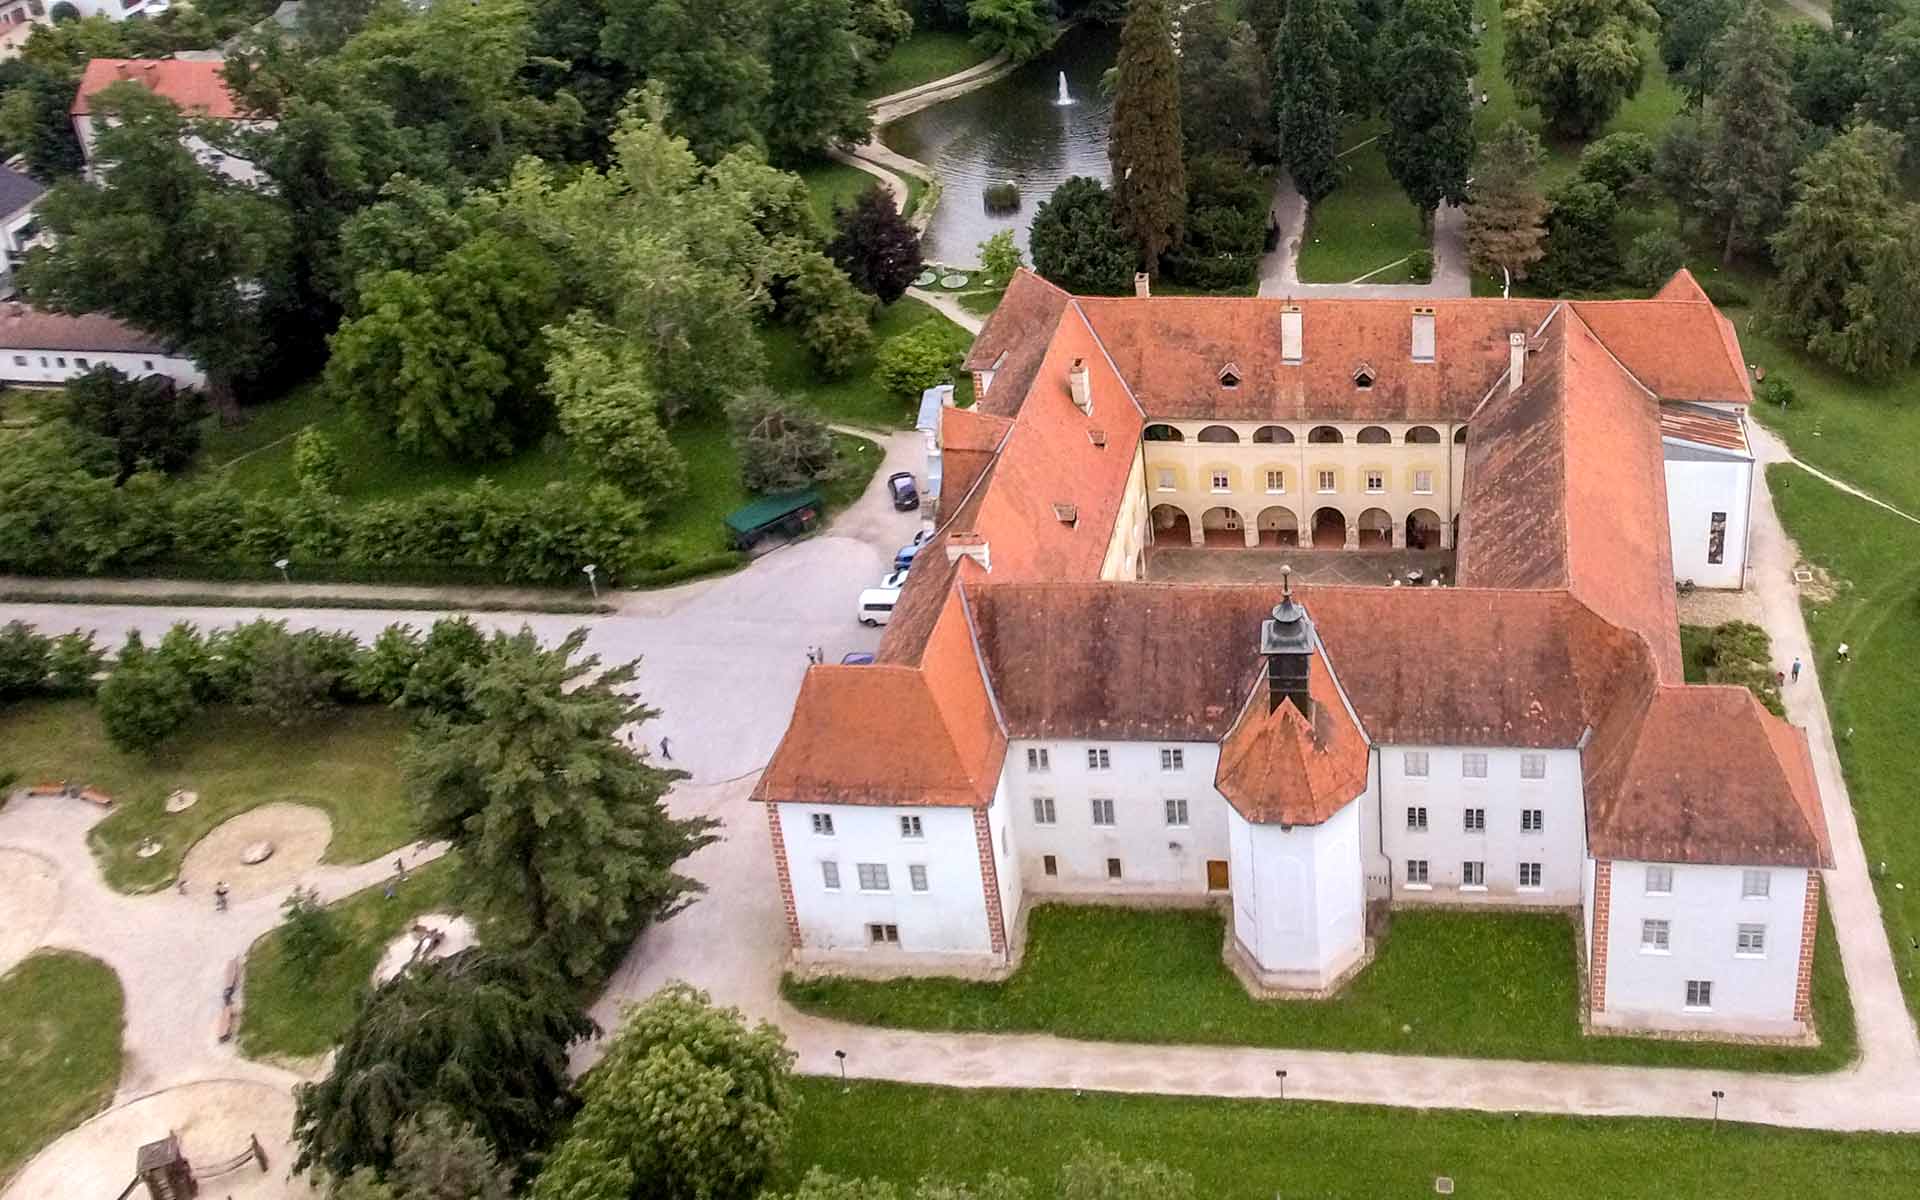 Castle Murska Sobota, Castle Grad and Castle Tabor - Three castles